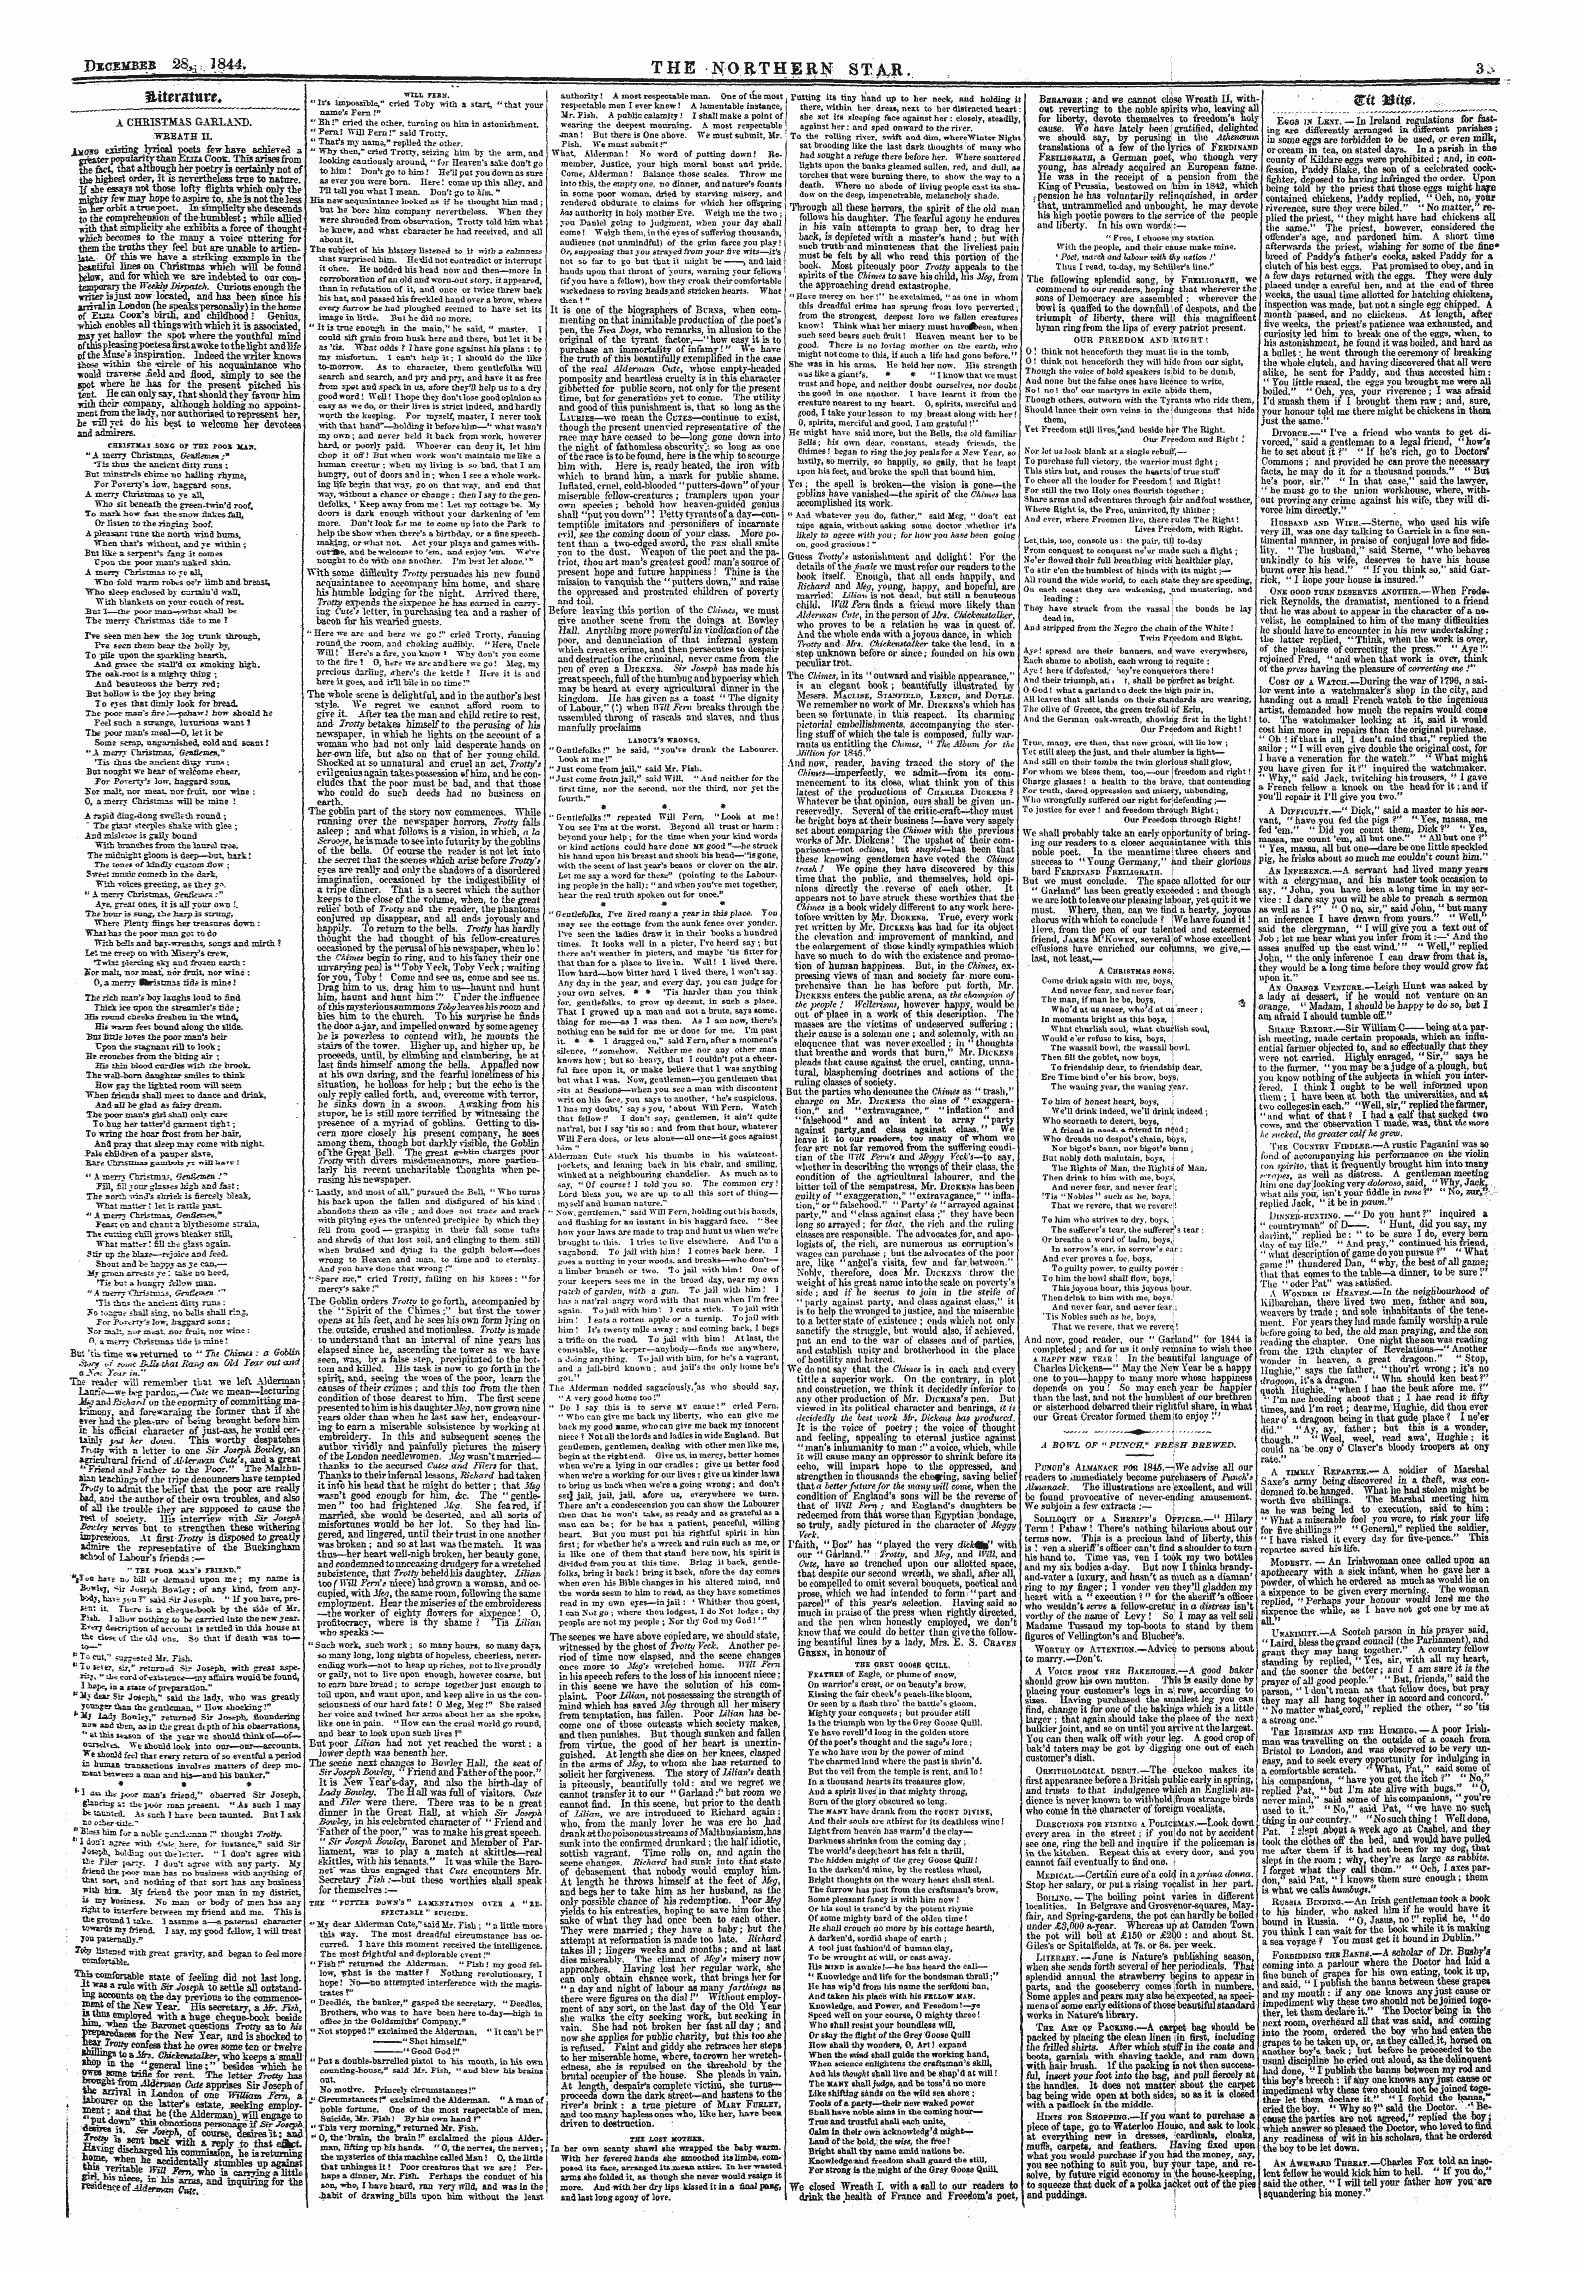 Northern Star (1837-1852): jS F Y, 3rd edition - Aitsratttt*